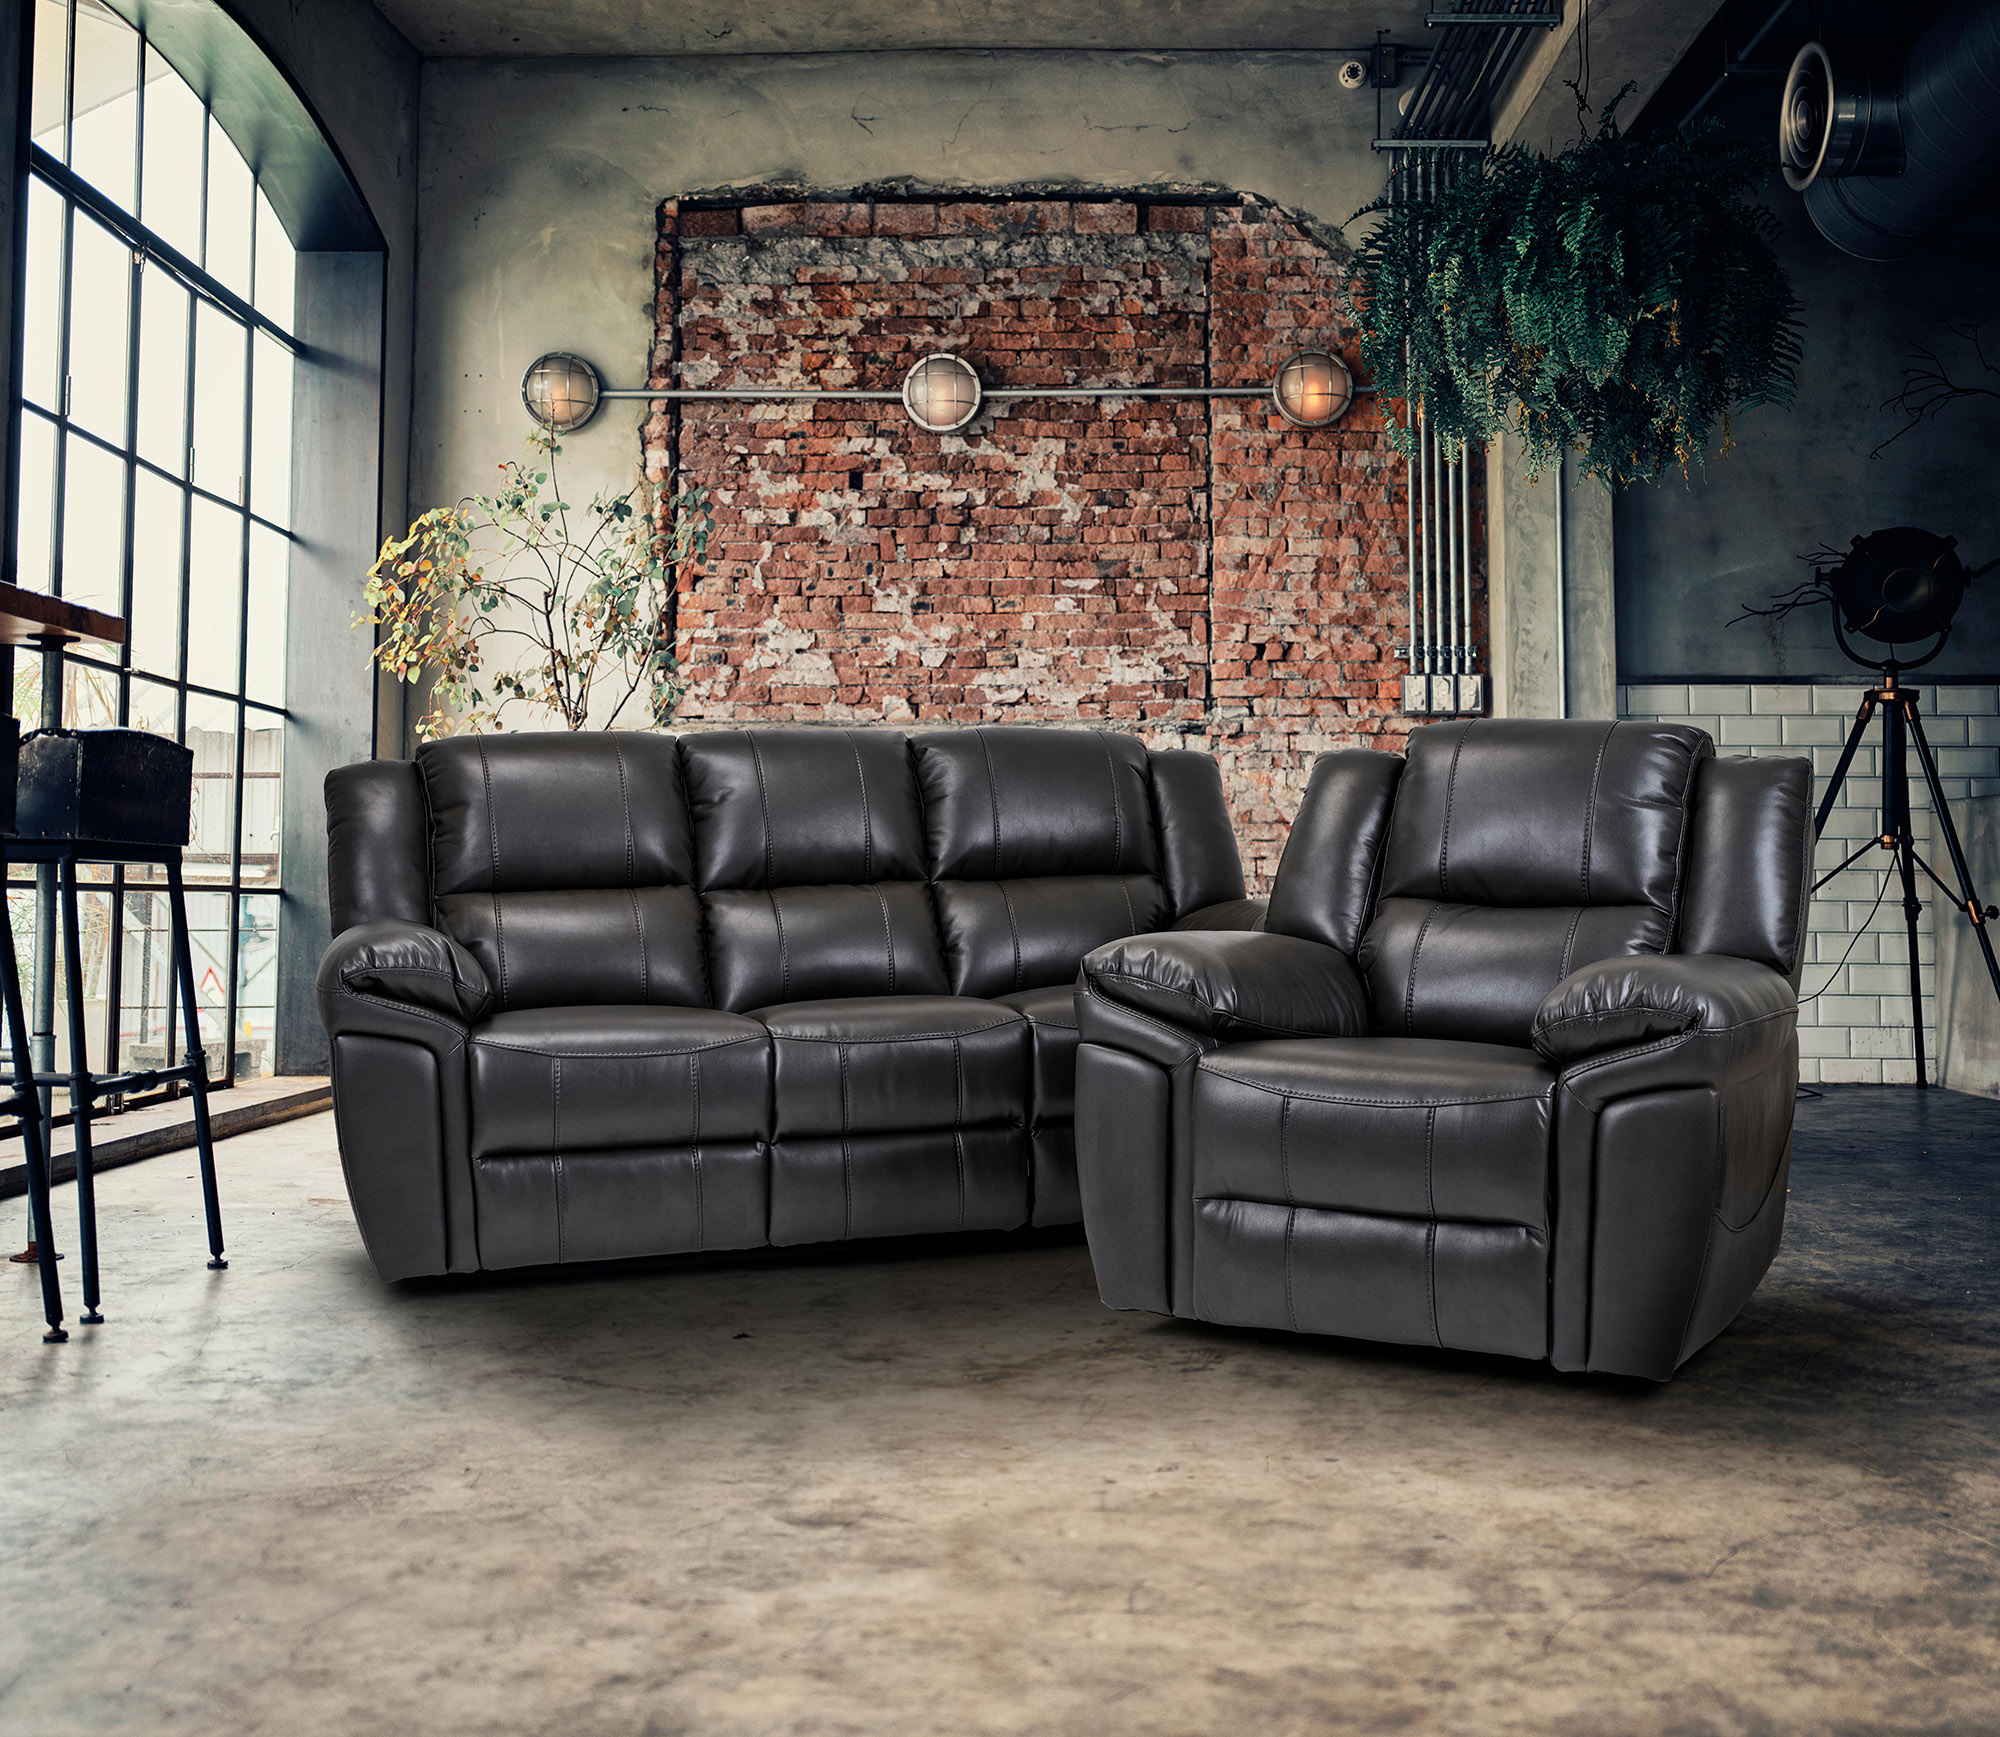 New Black sofas set in Oakland